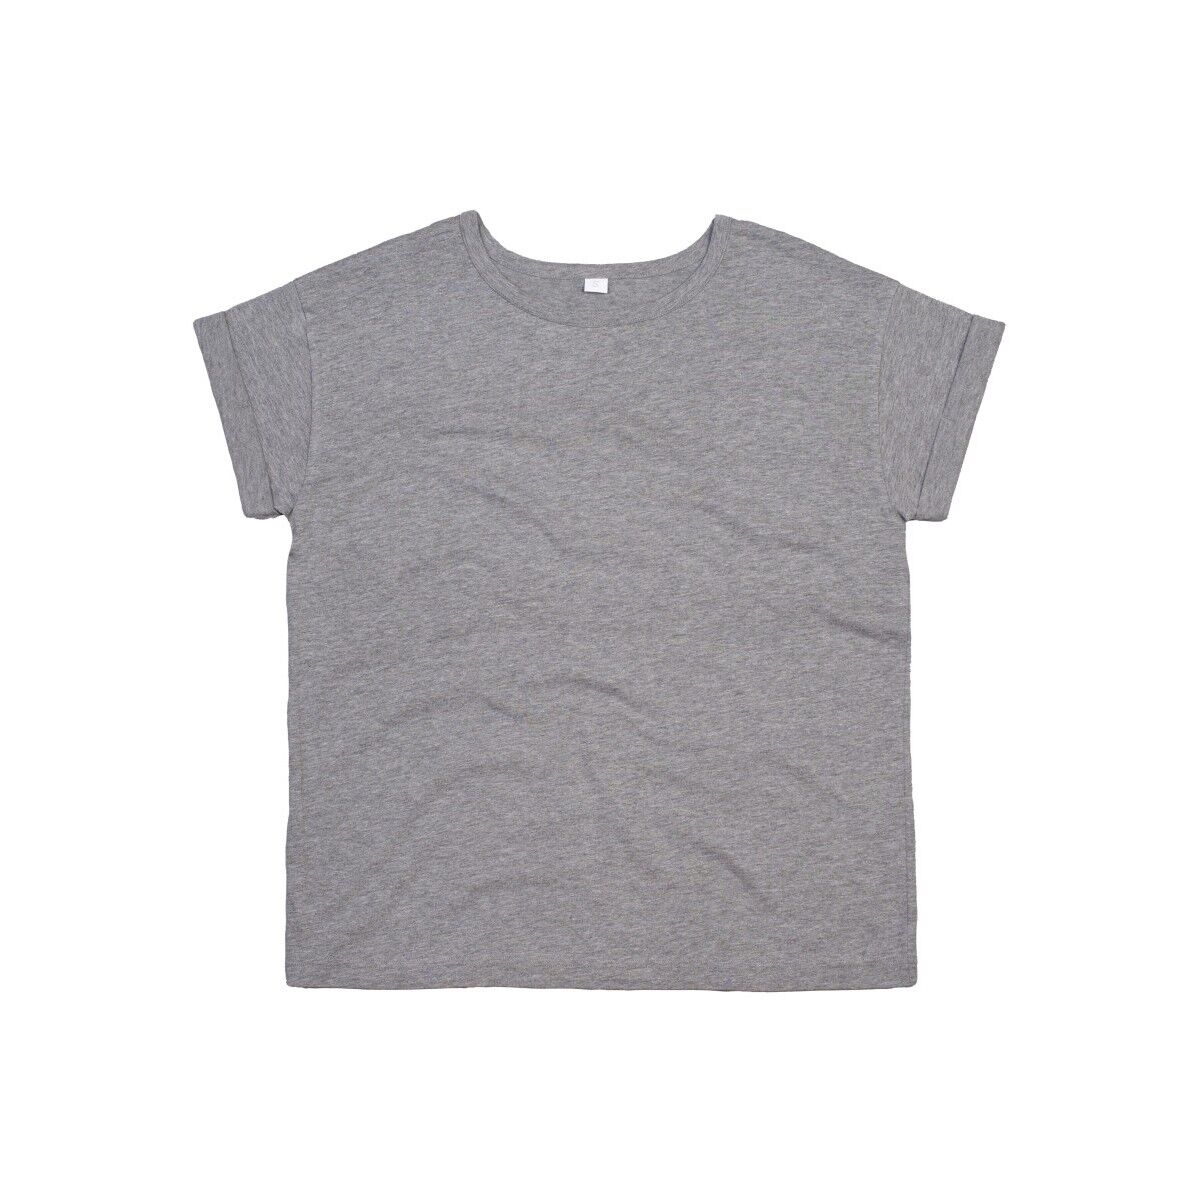 Mantis comfortable fit womans T-shirt -  Heather Grey